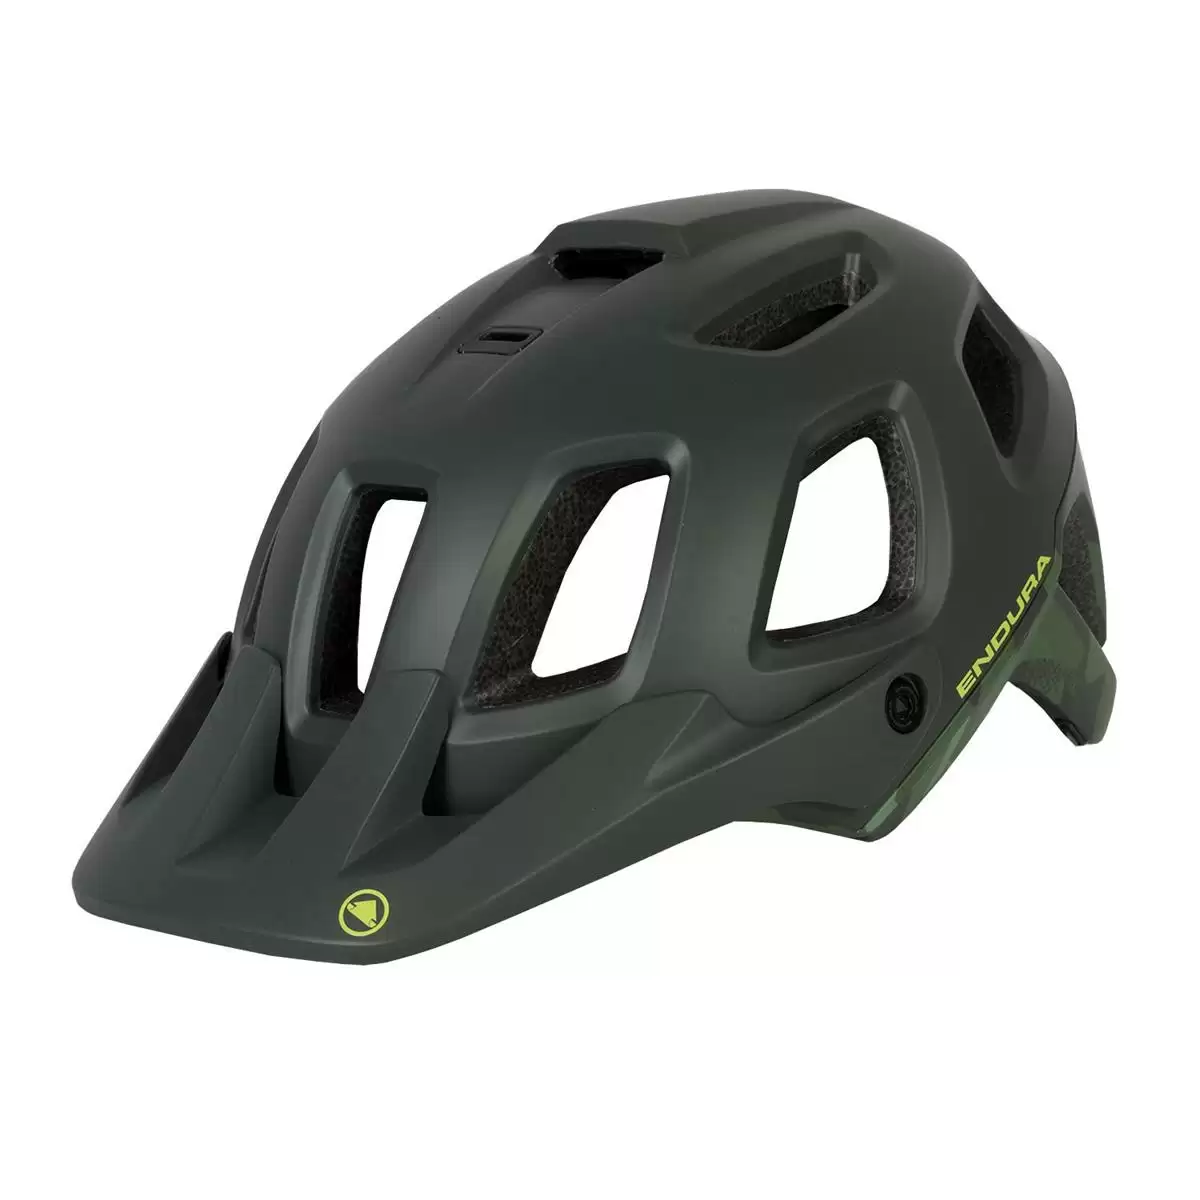 helmet SingleTrack Helmet II green size M/L (55-59cm) - image